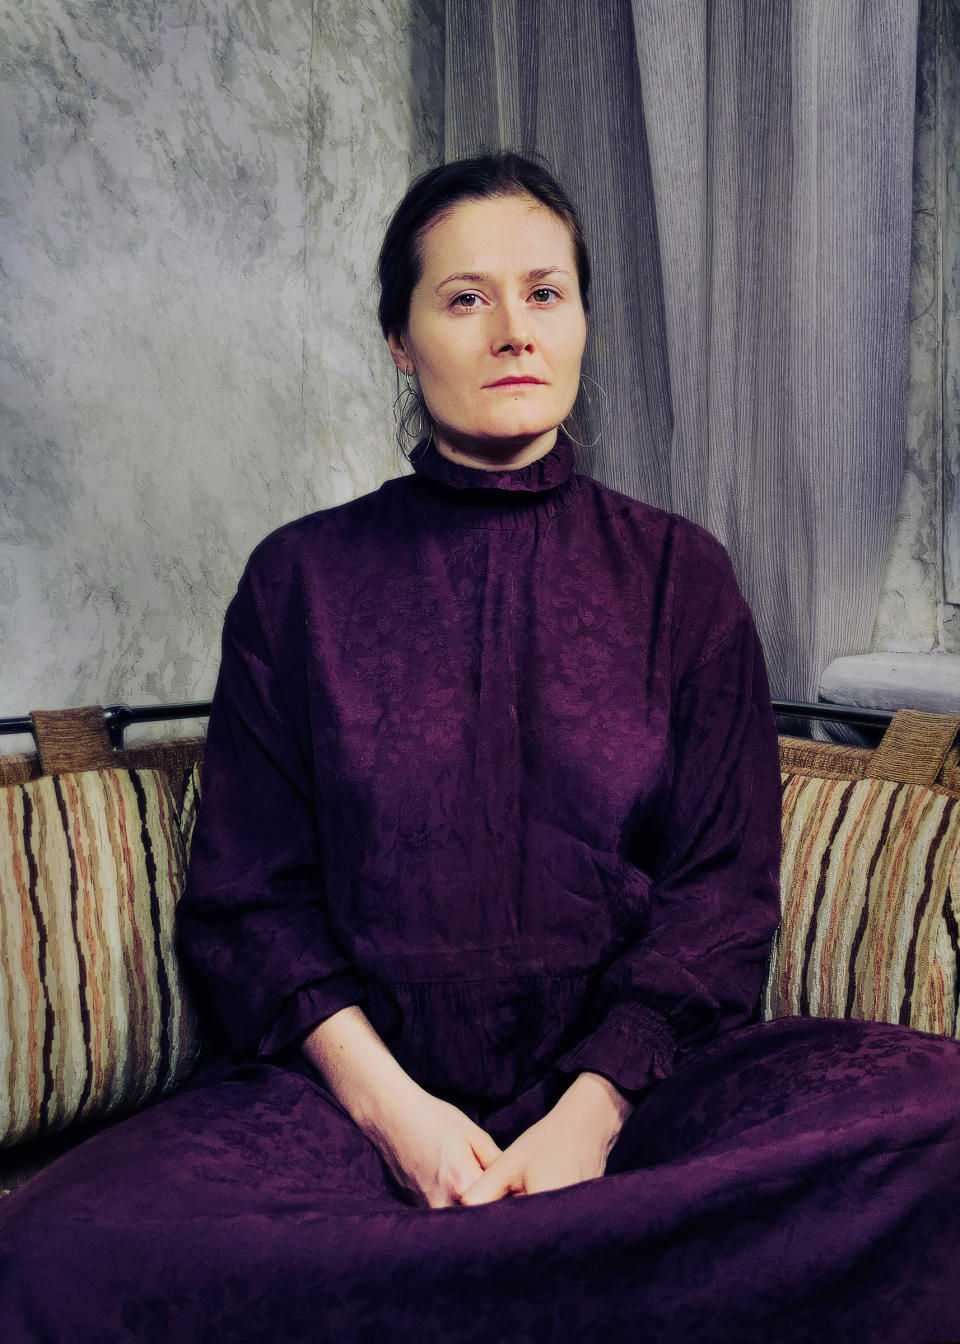 Oksana Vasyakina, photographed during a remote portrait session in December.<span class="copyright">Dina Litovsky for TIME</span>